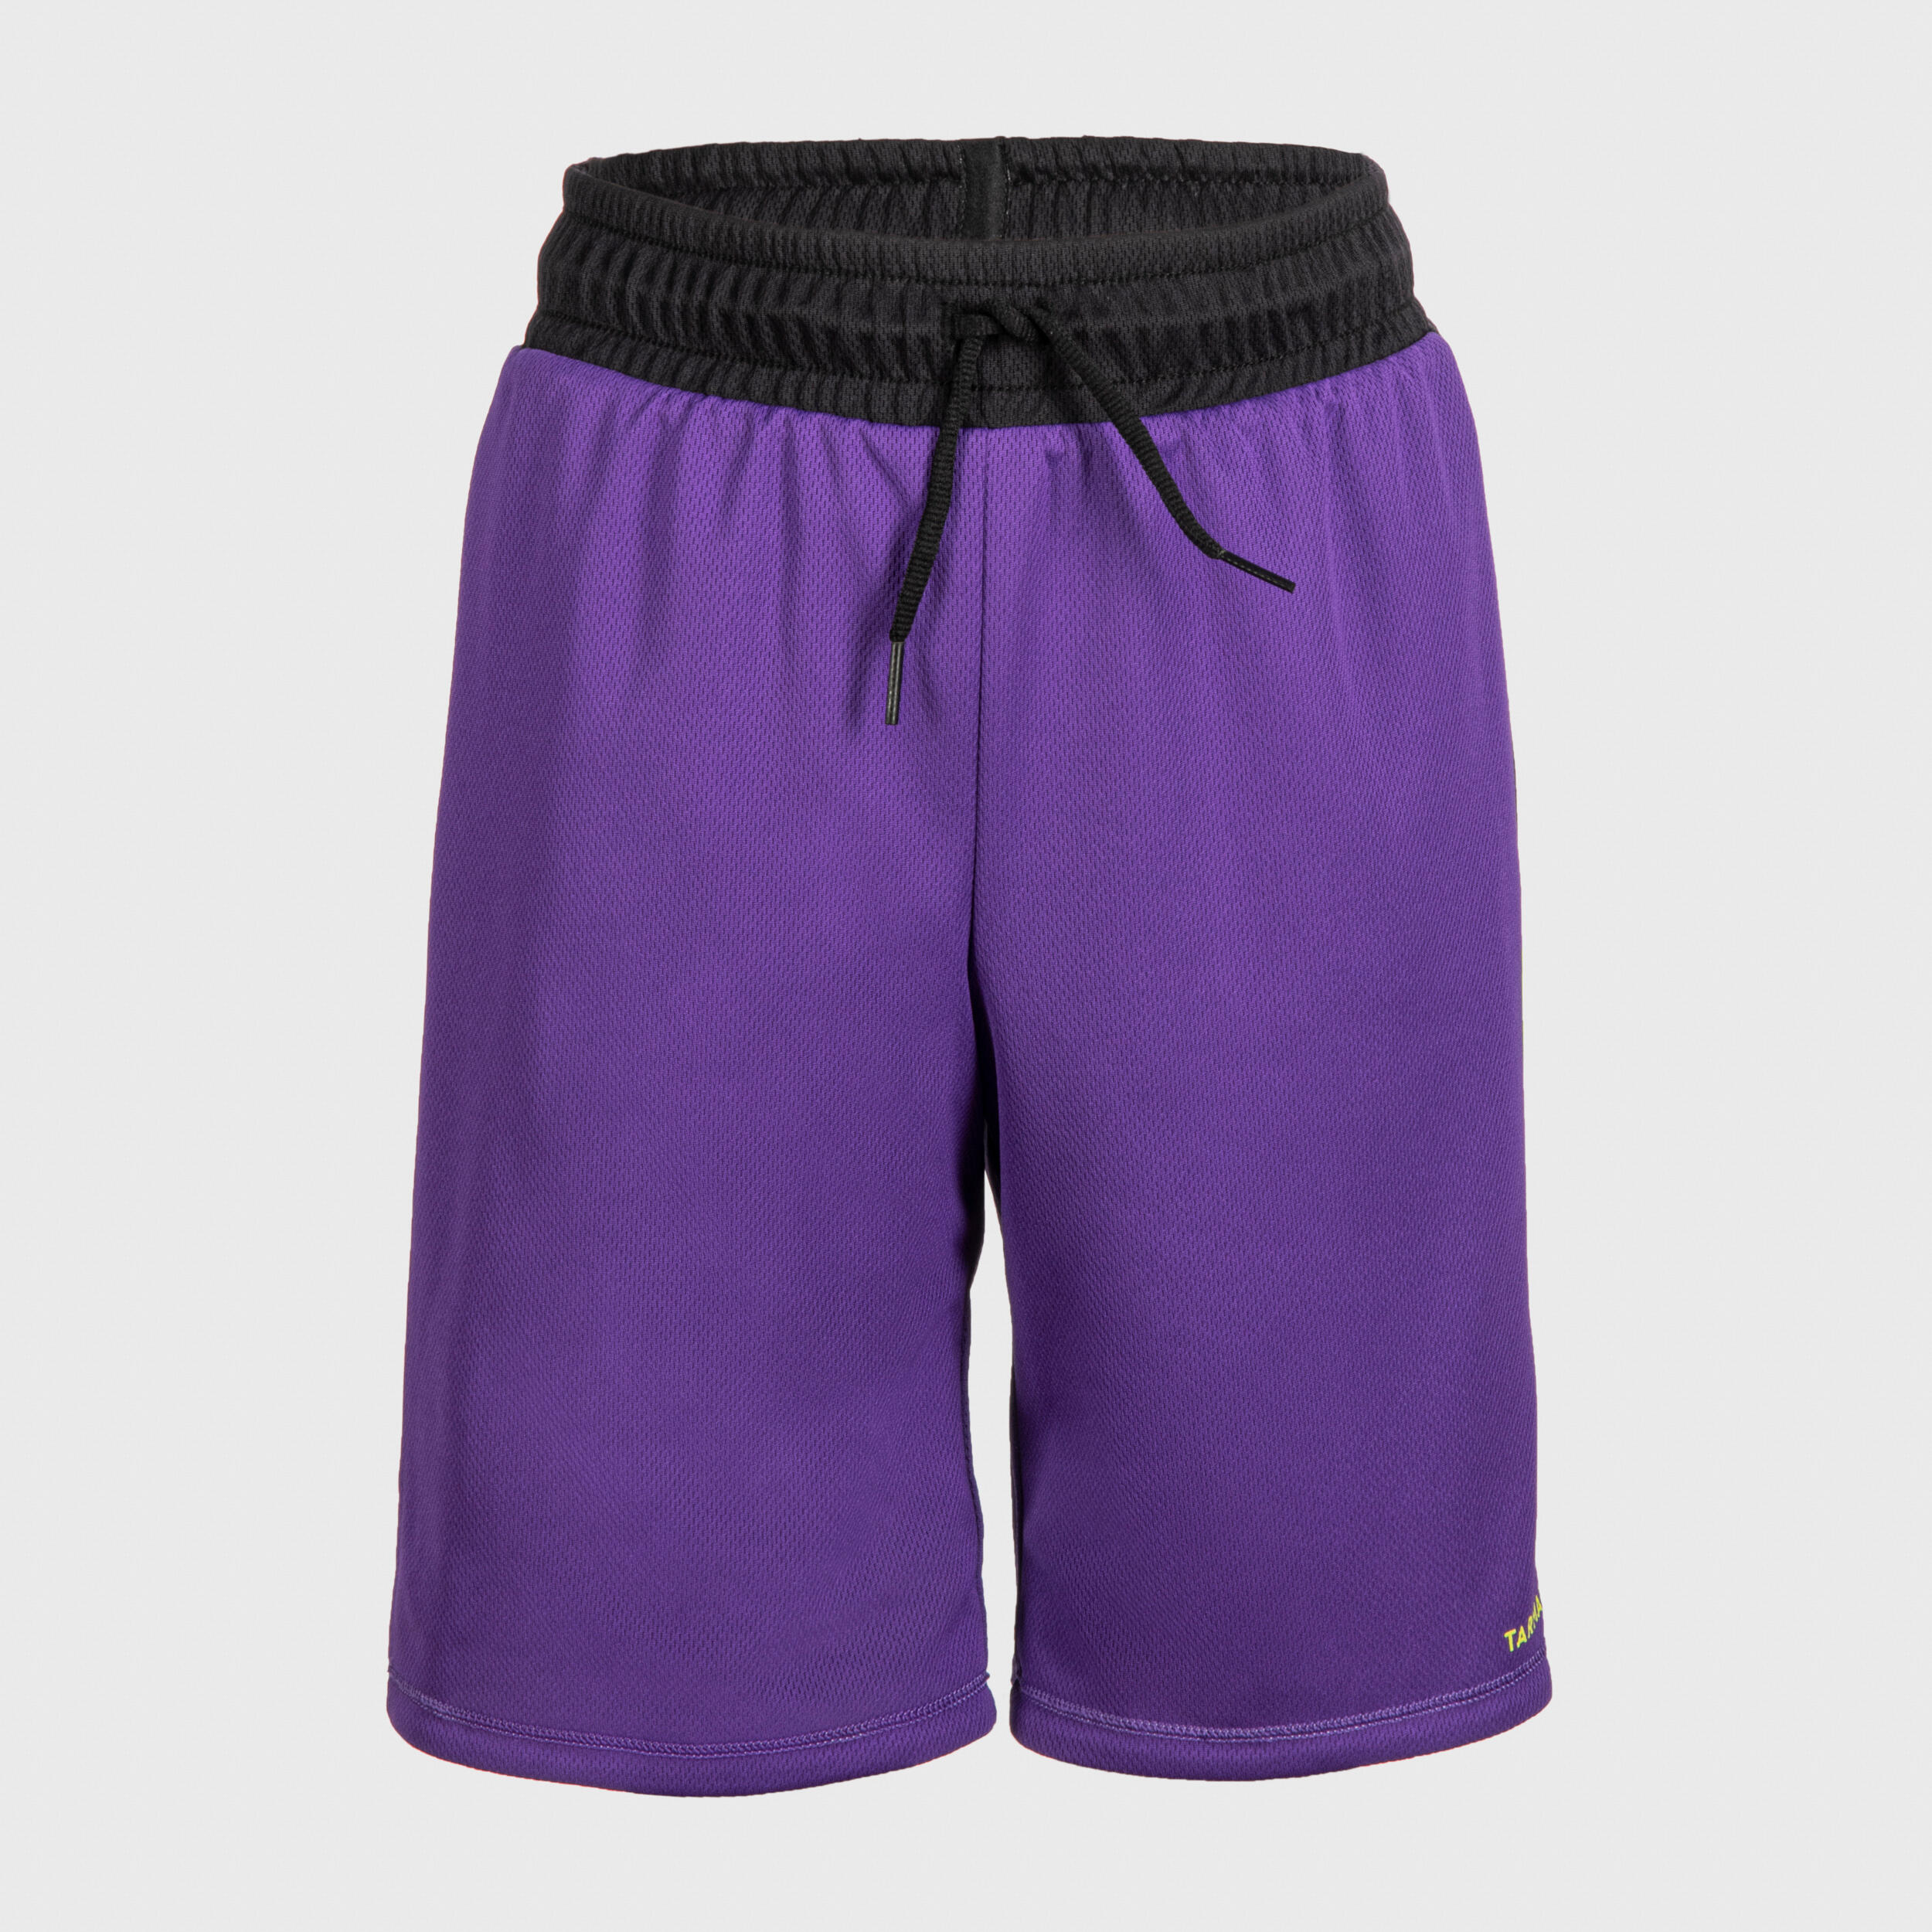 Kids' Reversible Basketball Shorts SH500R - White/Purple 6/11